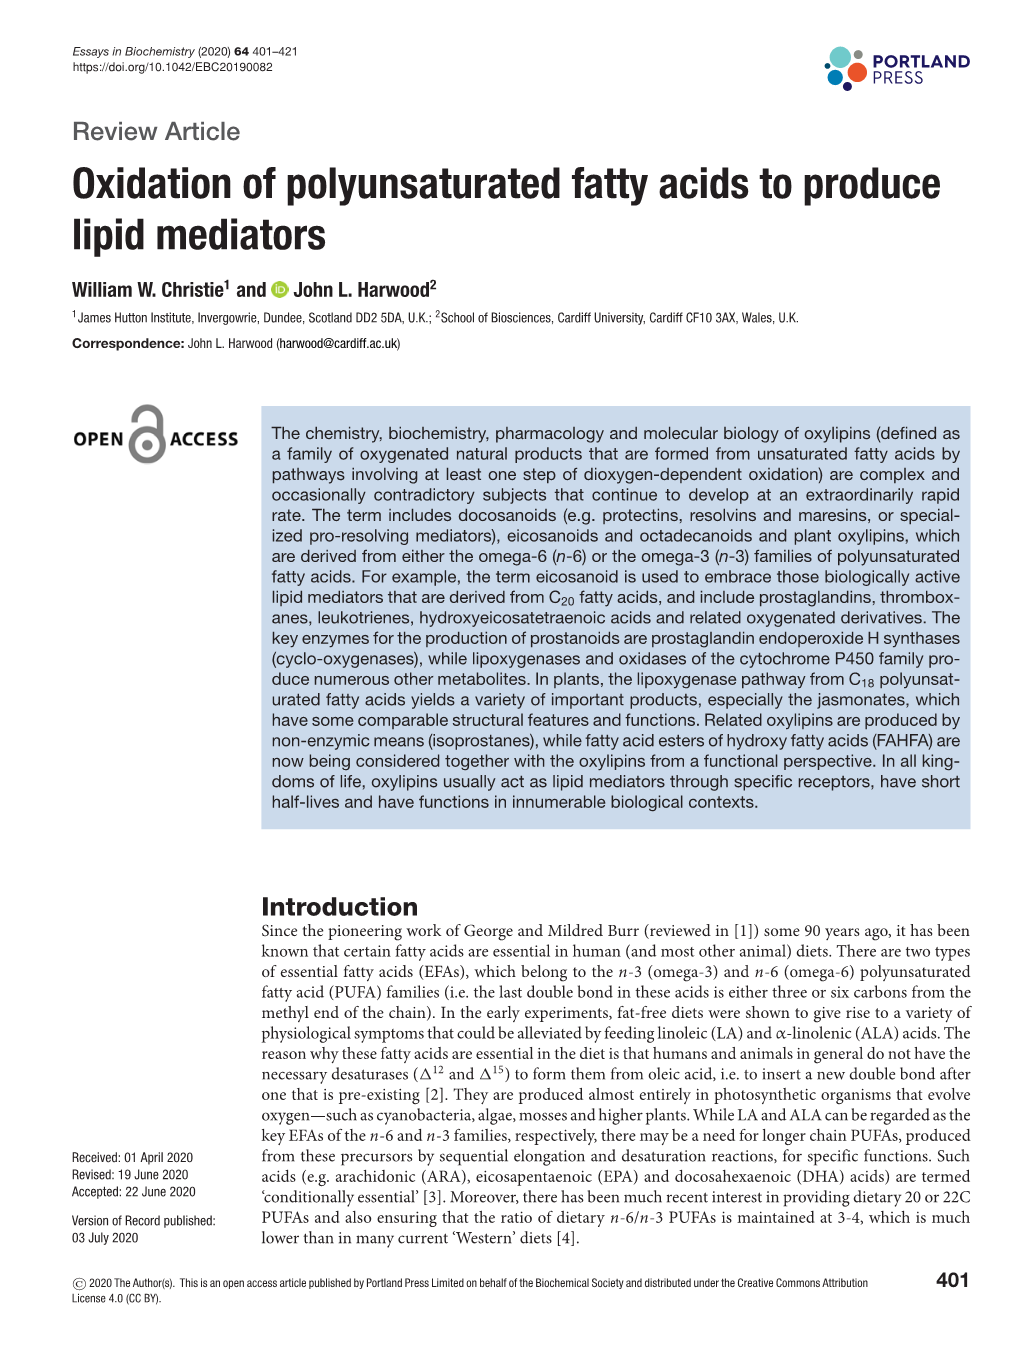 Oxidation of Polyunsaturated Fatty Acids to Produce Lipid Mediators